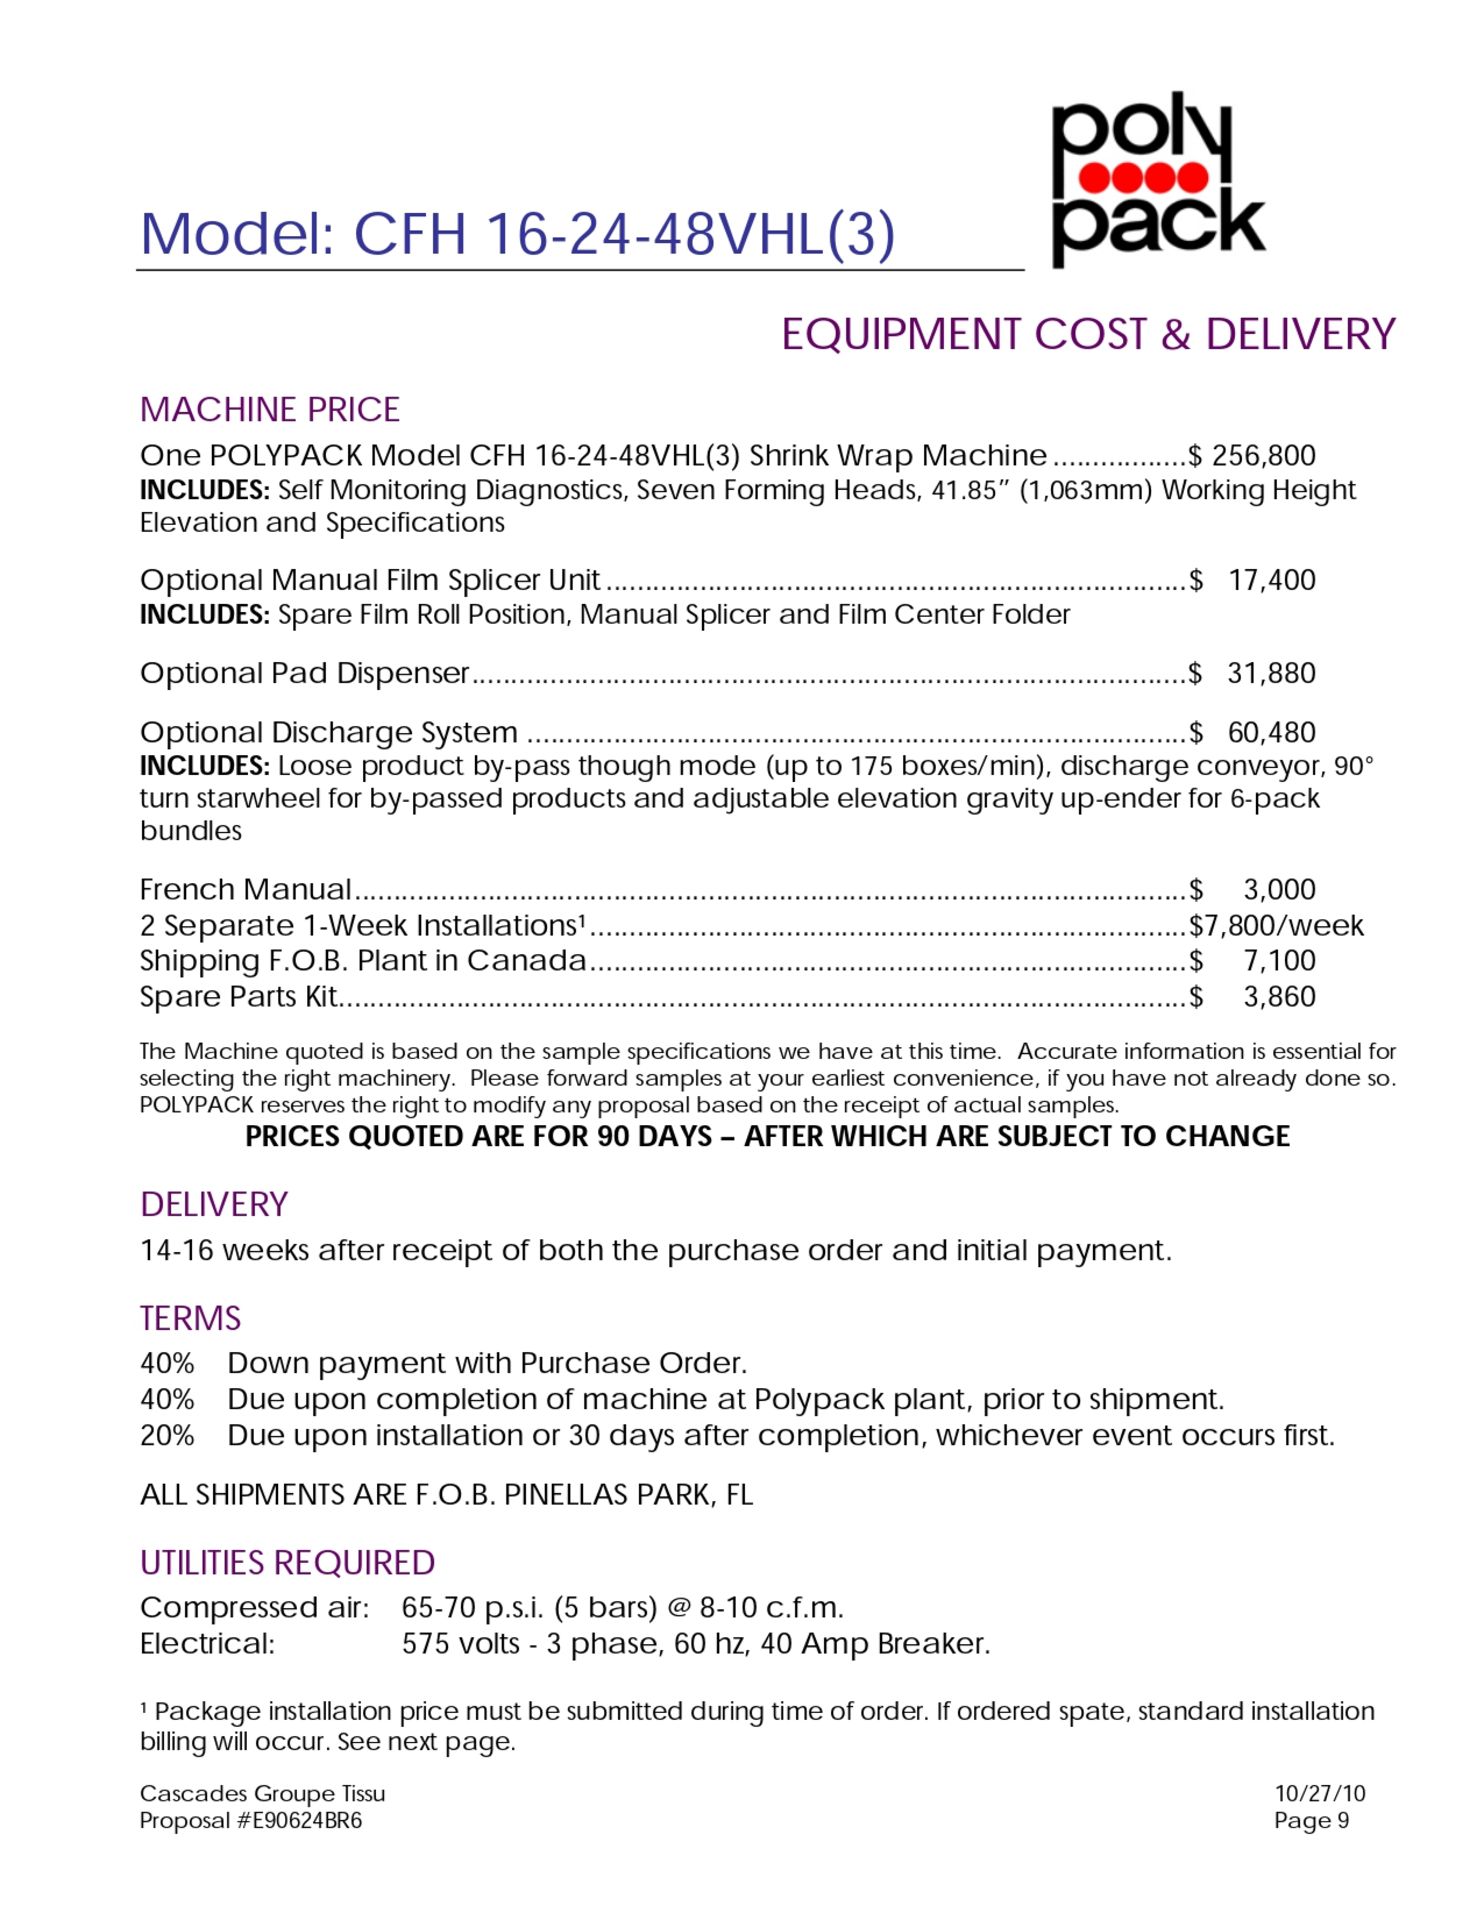 2010 SHRINK WRAPPER FULLY AUTOMATIC, BRAND: POLY PACK, MODEL CFH 16-24-48VHL(3), 600V, 40AMP, - Image 21 of 29